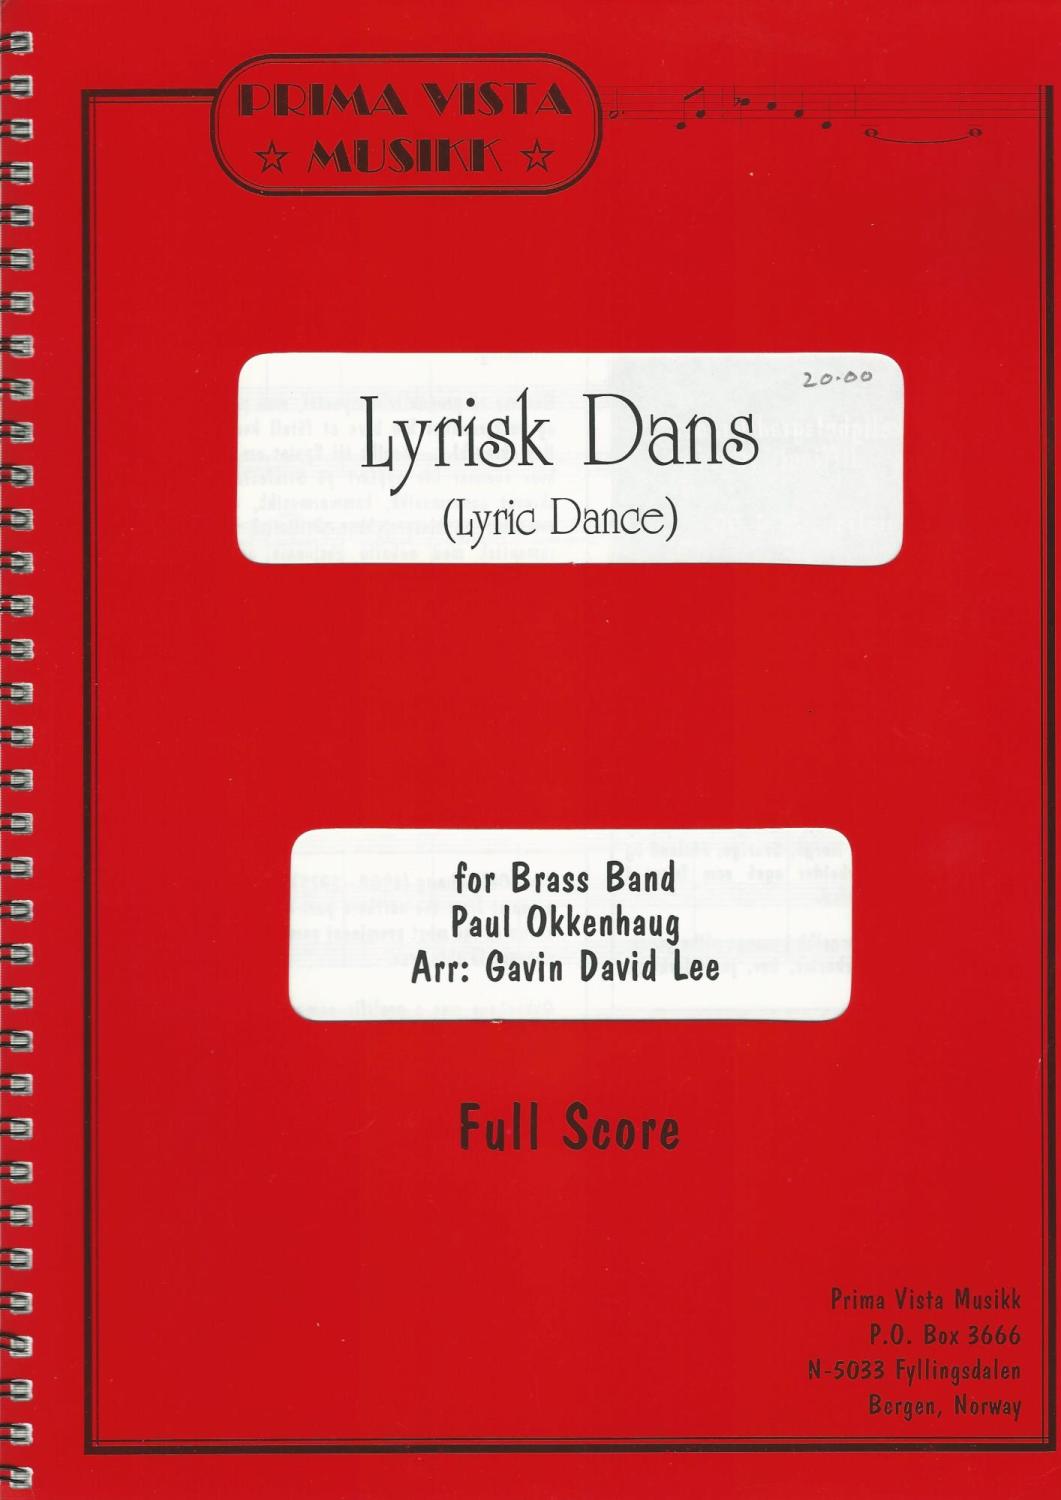 Lyric Dance (Lyrisk Dans) for Brass Band - Paul Okkenhaug arr. Gavin David 